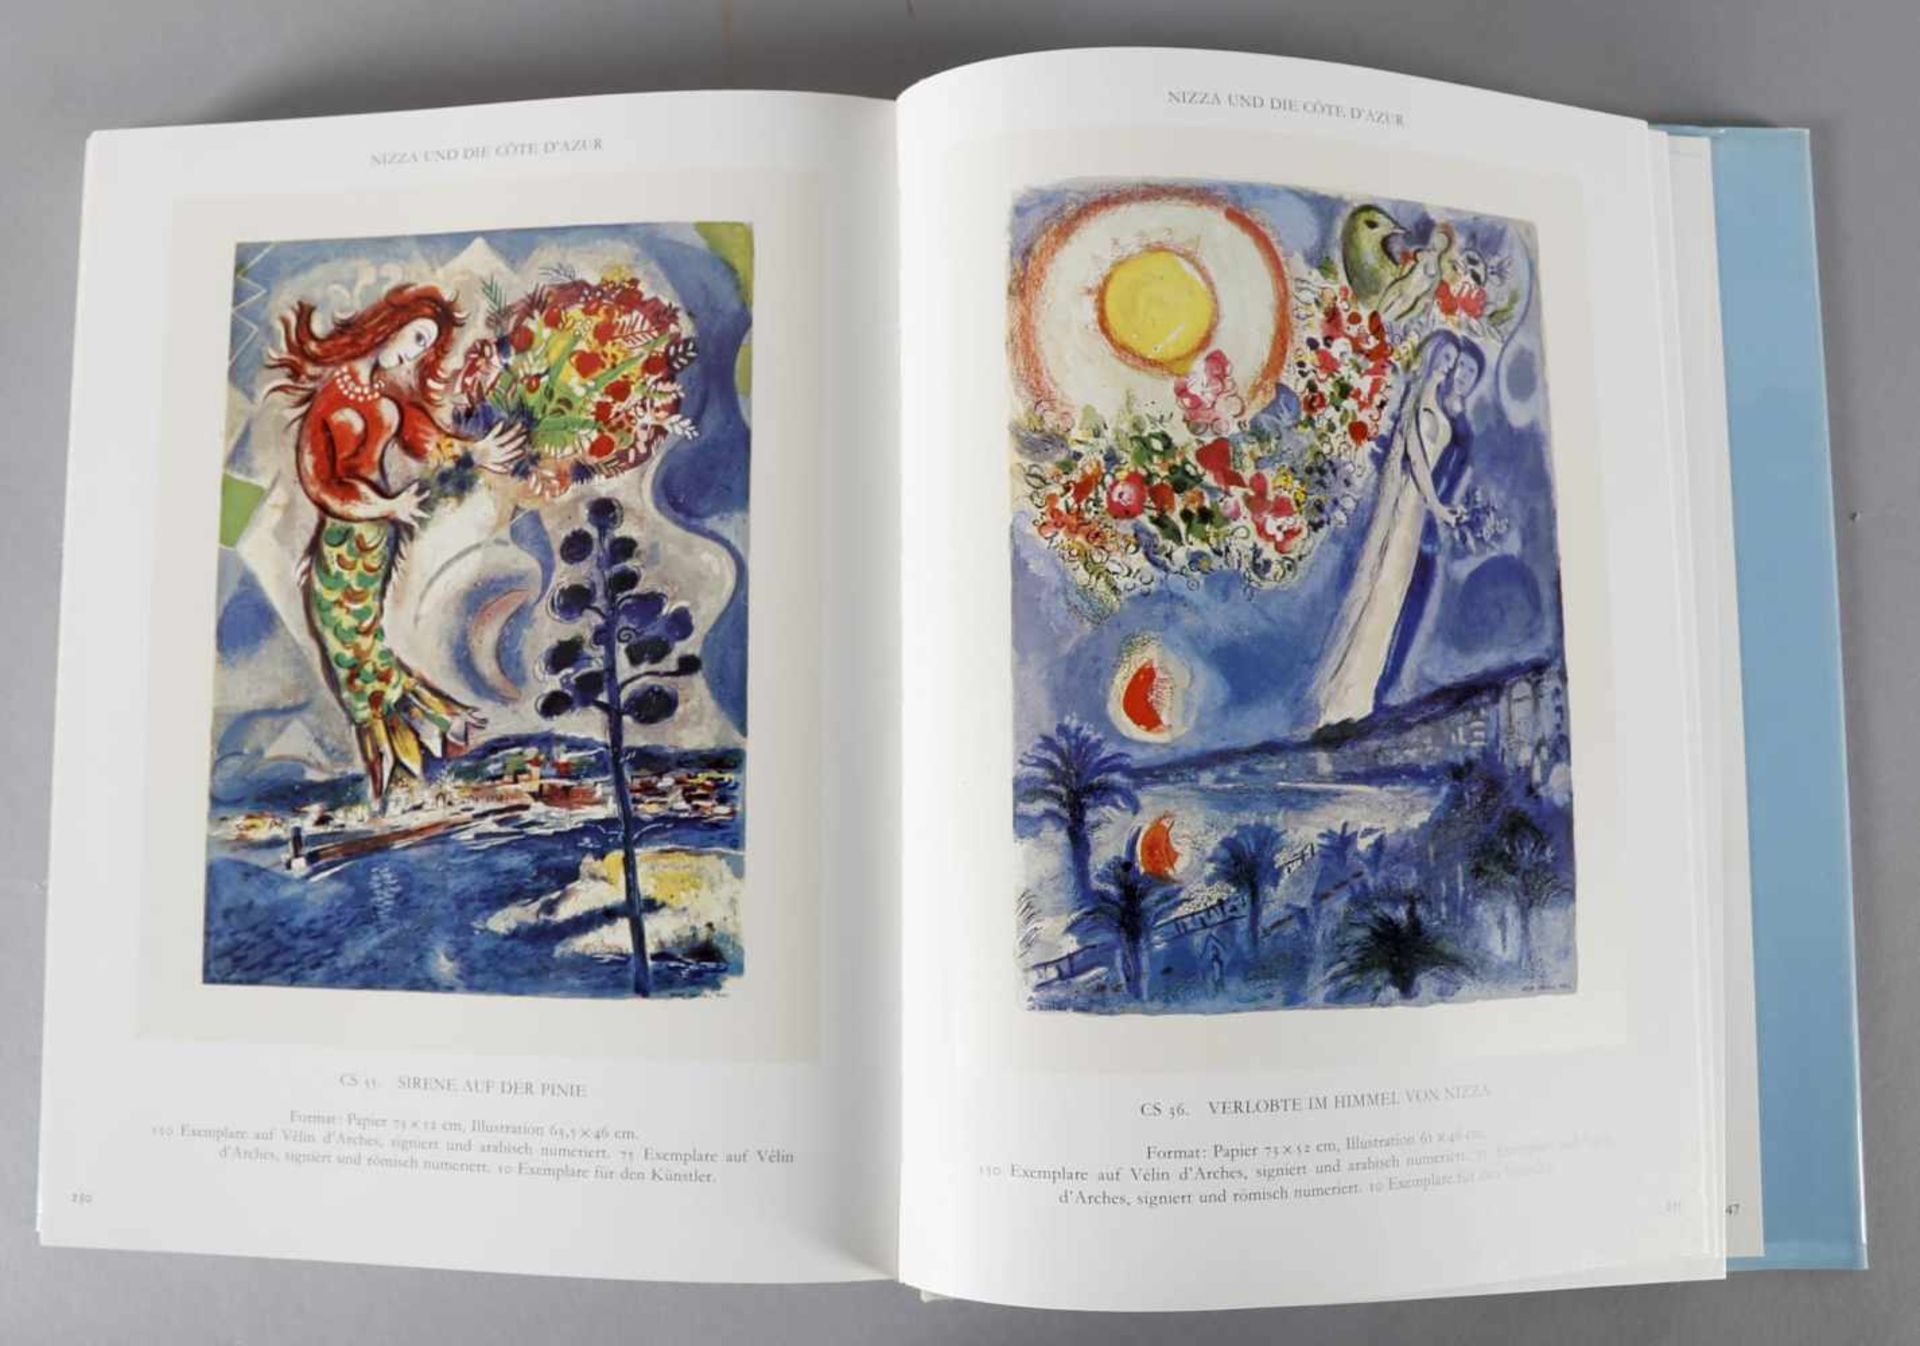 Chagall Lithograph, Vol. 1 - VI Marc Chagall-Mourlot, Julien Cain/Charles Sorlier, deutsche - Bild 2 aus 5